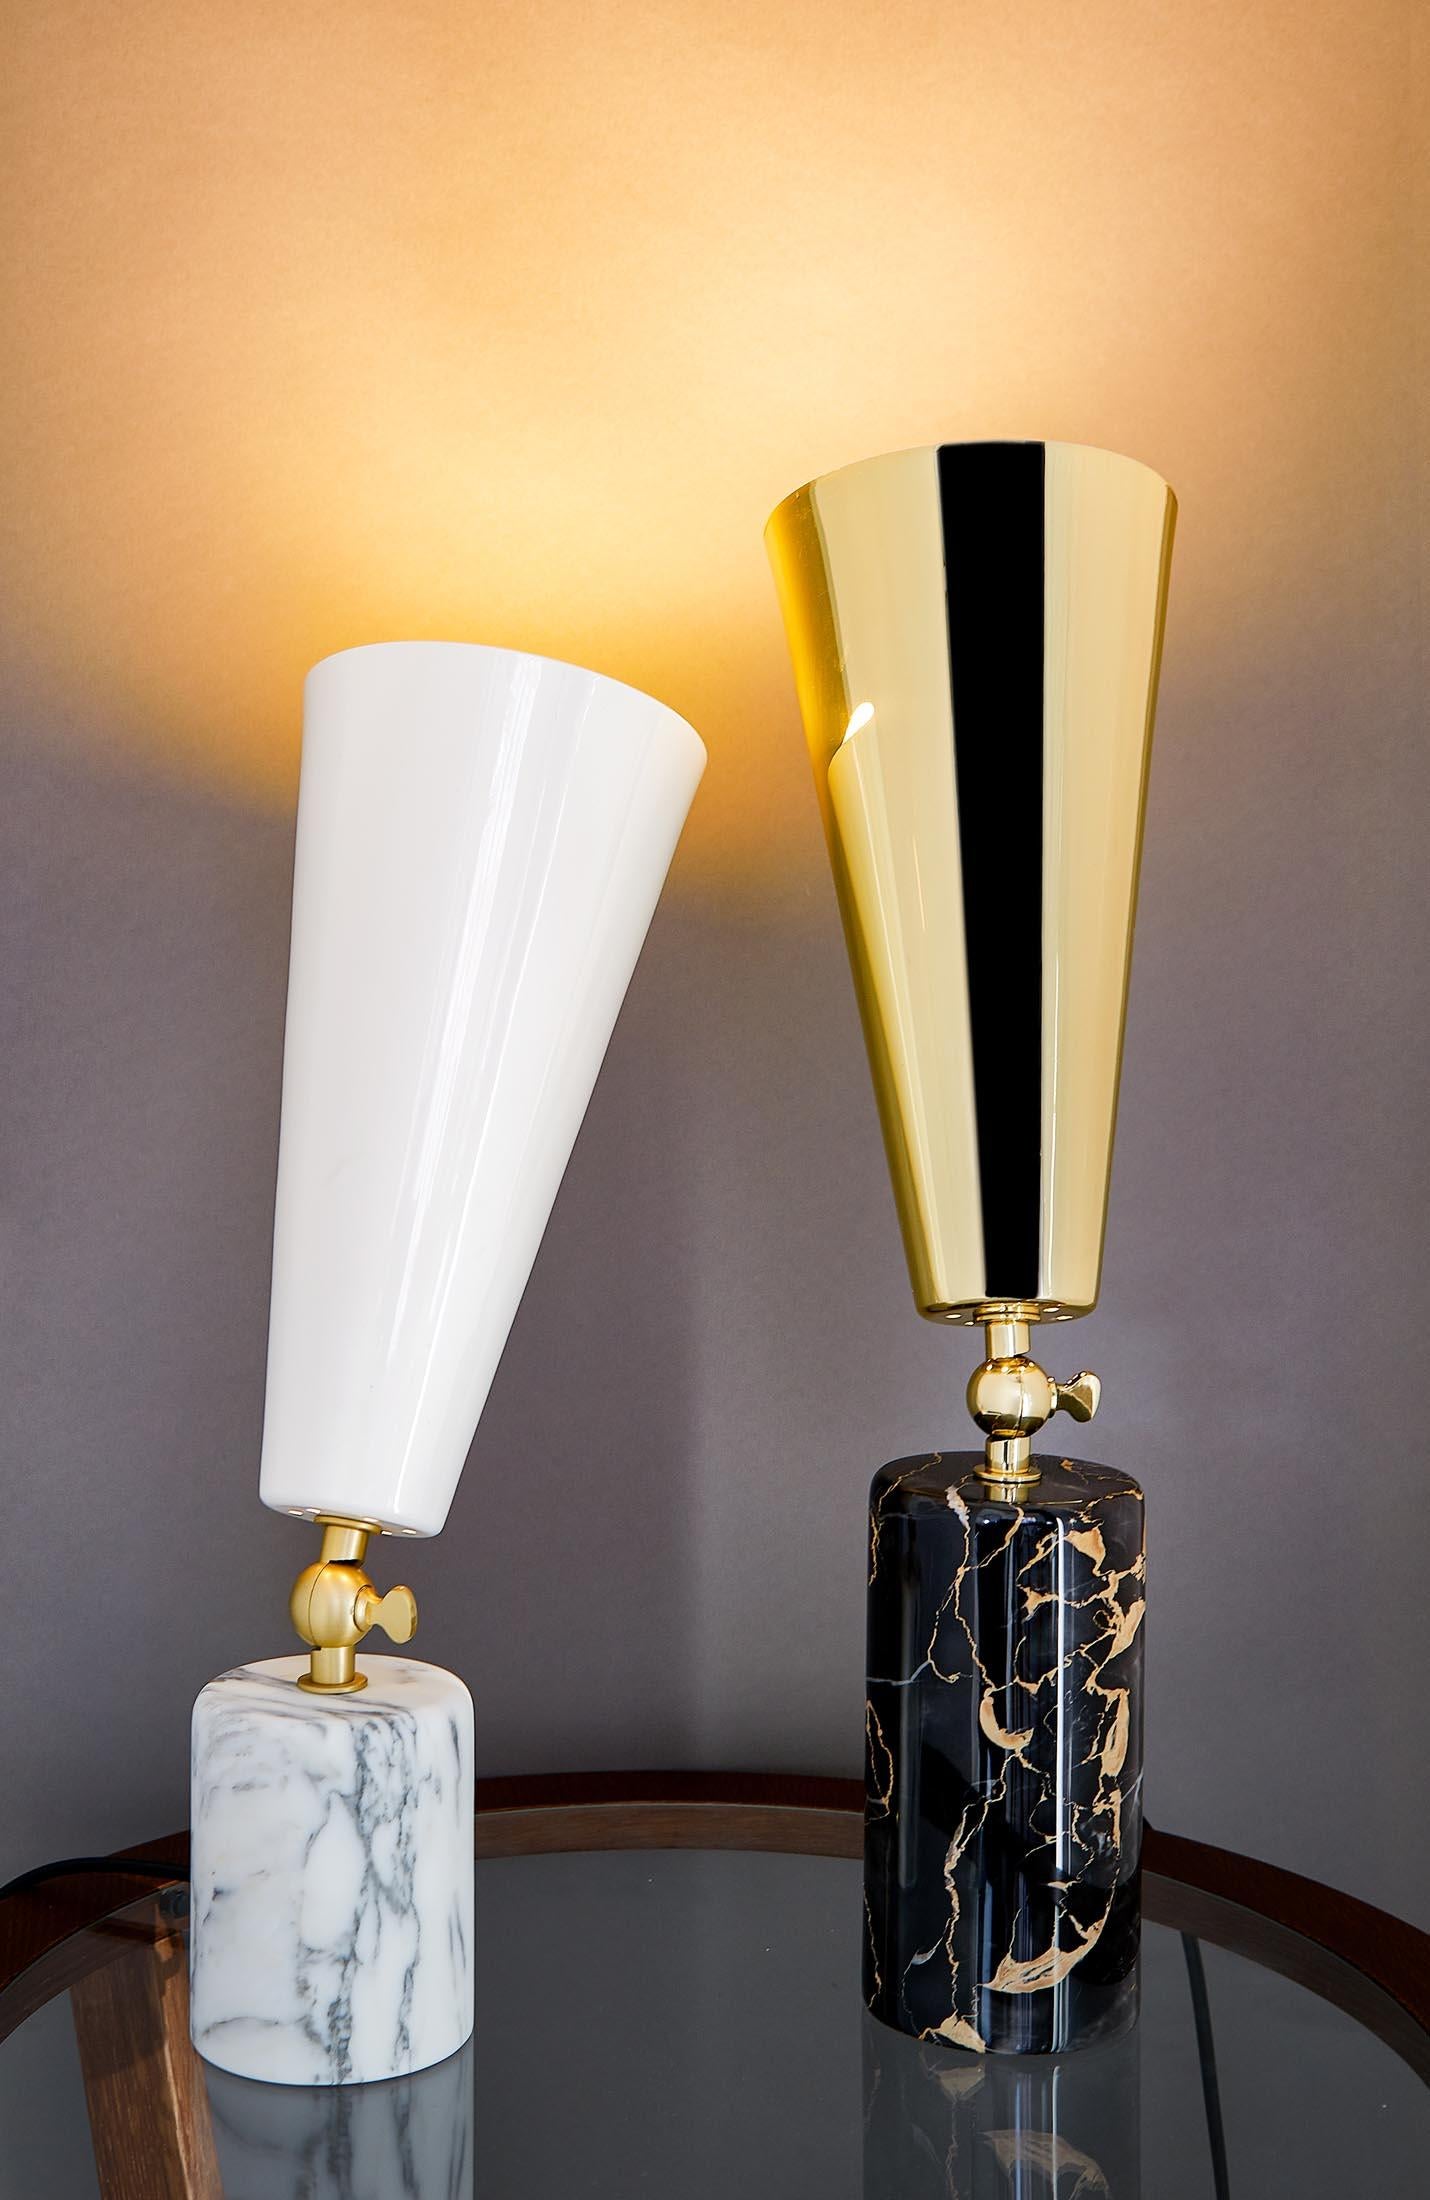 Tato Italia 'Vox' Table Lamp in White Carrara Marble and Satin Brass For Sale 4